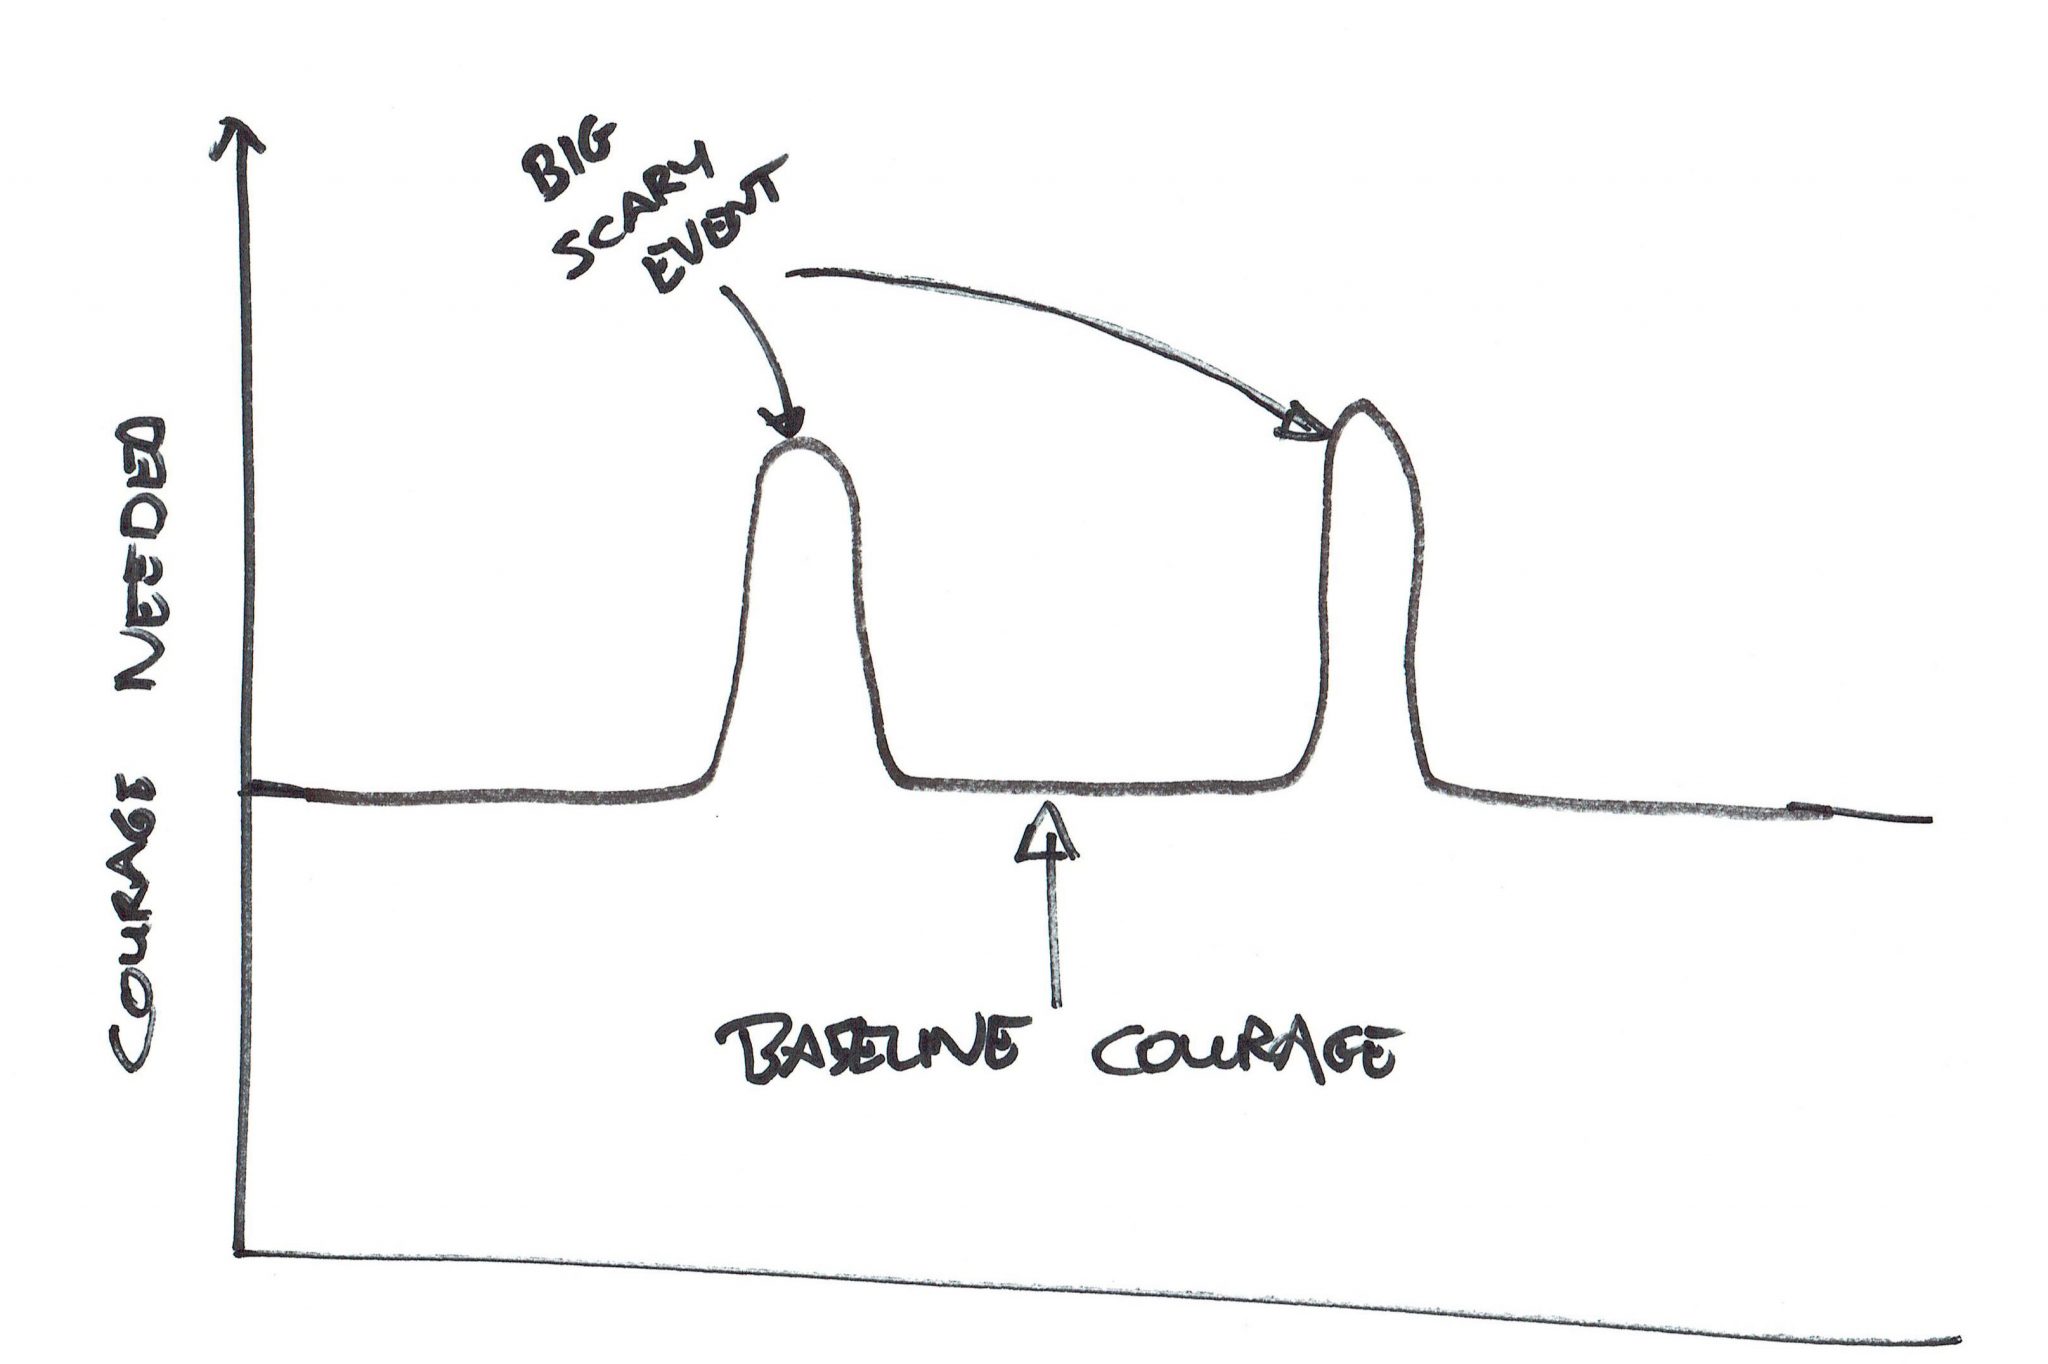 Baseline Courage Graph 1